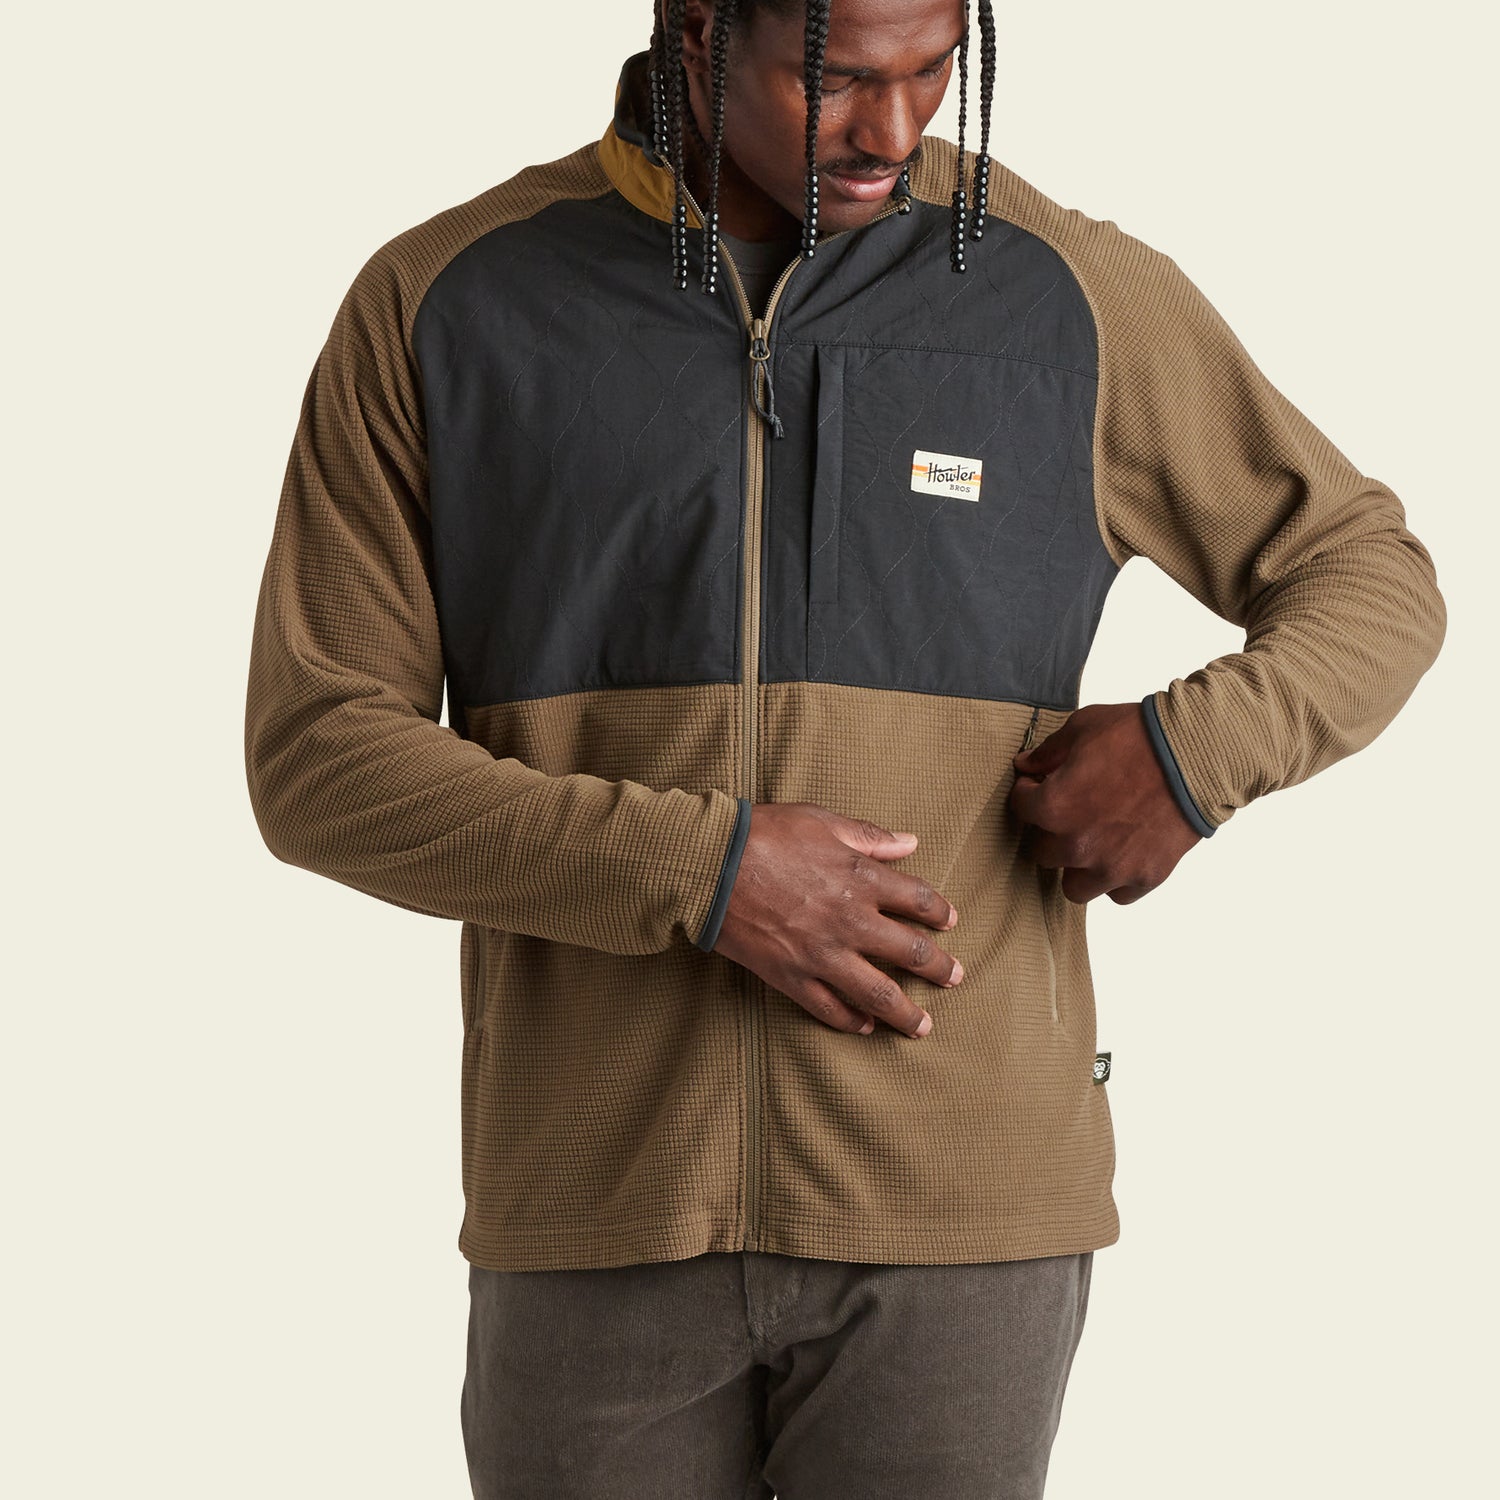 Talisman Jacket HOWLER – Fleece BROTHERS Grid